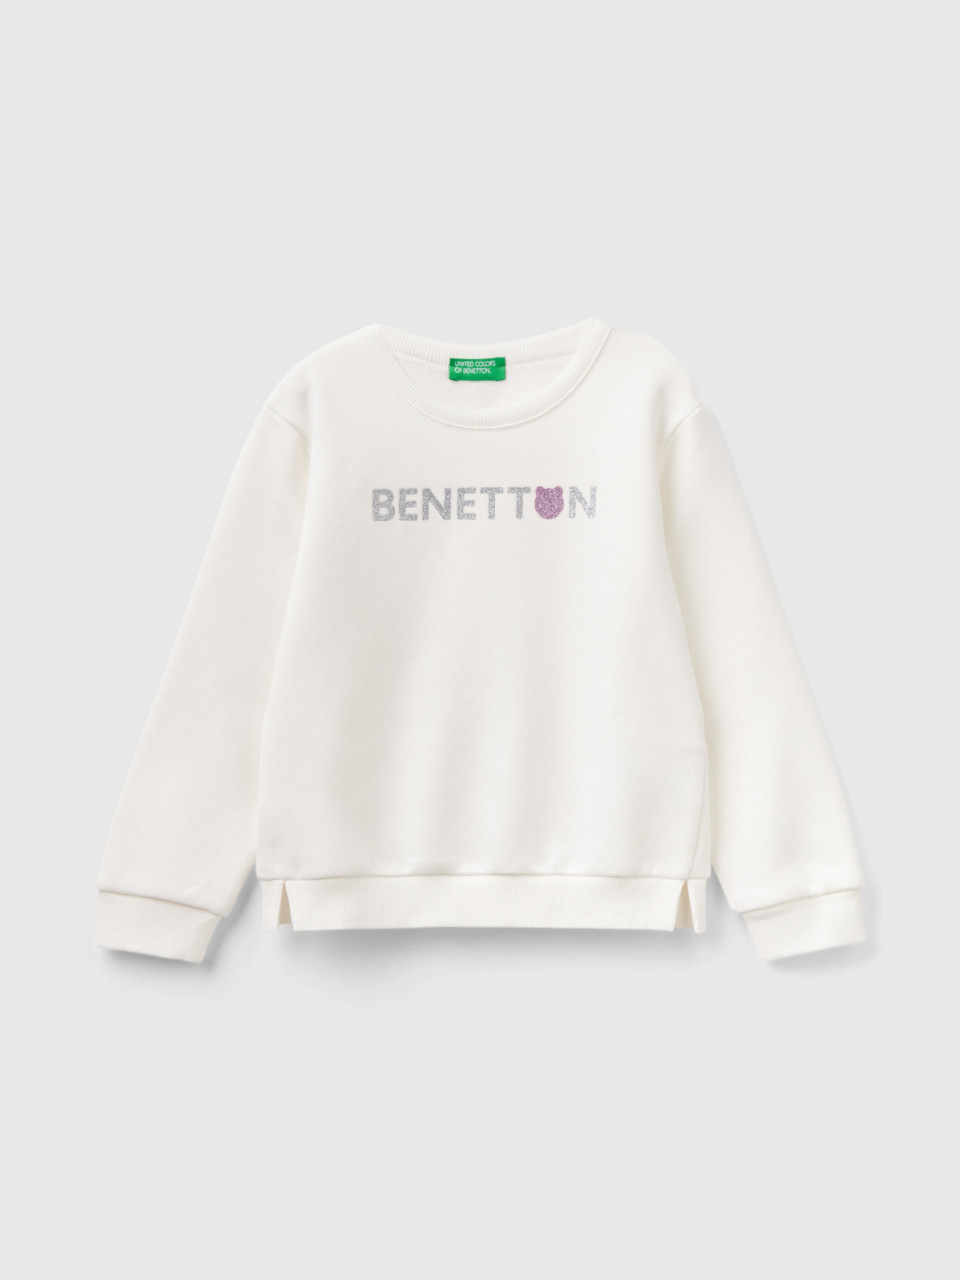 Benetton, Pullover Sweatshirt With Glittery Print, Creamy White, Kids